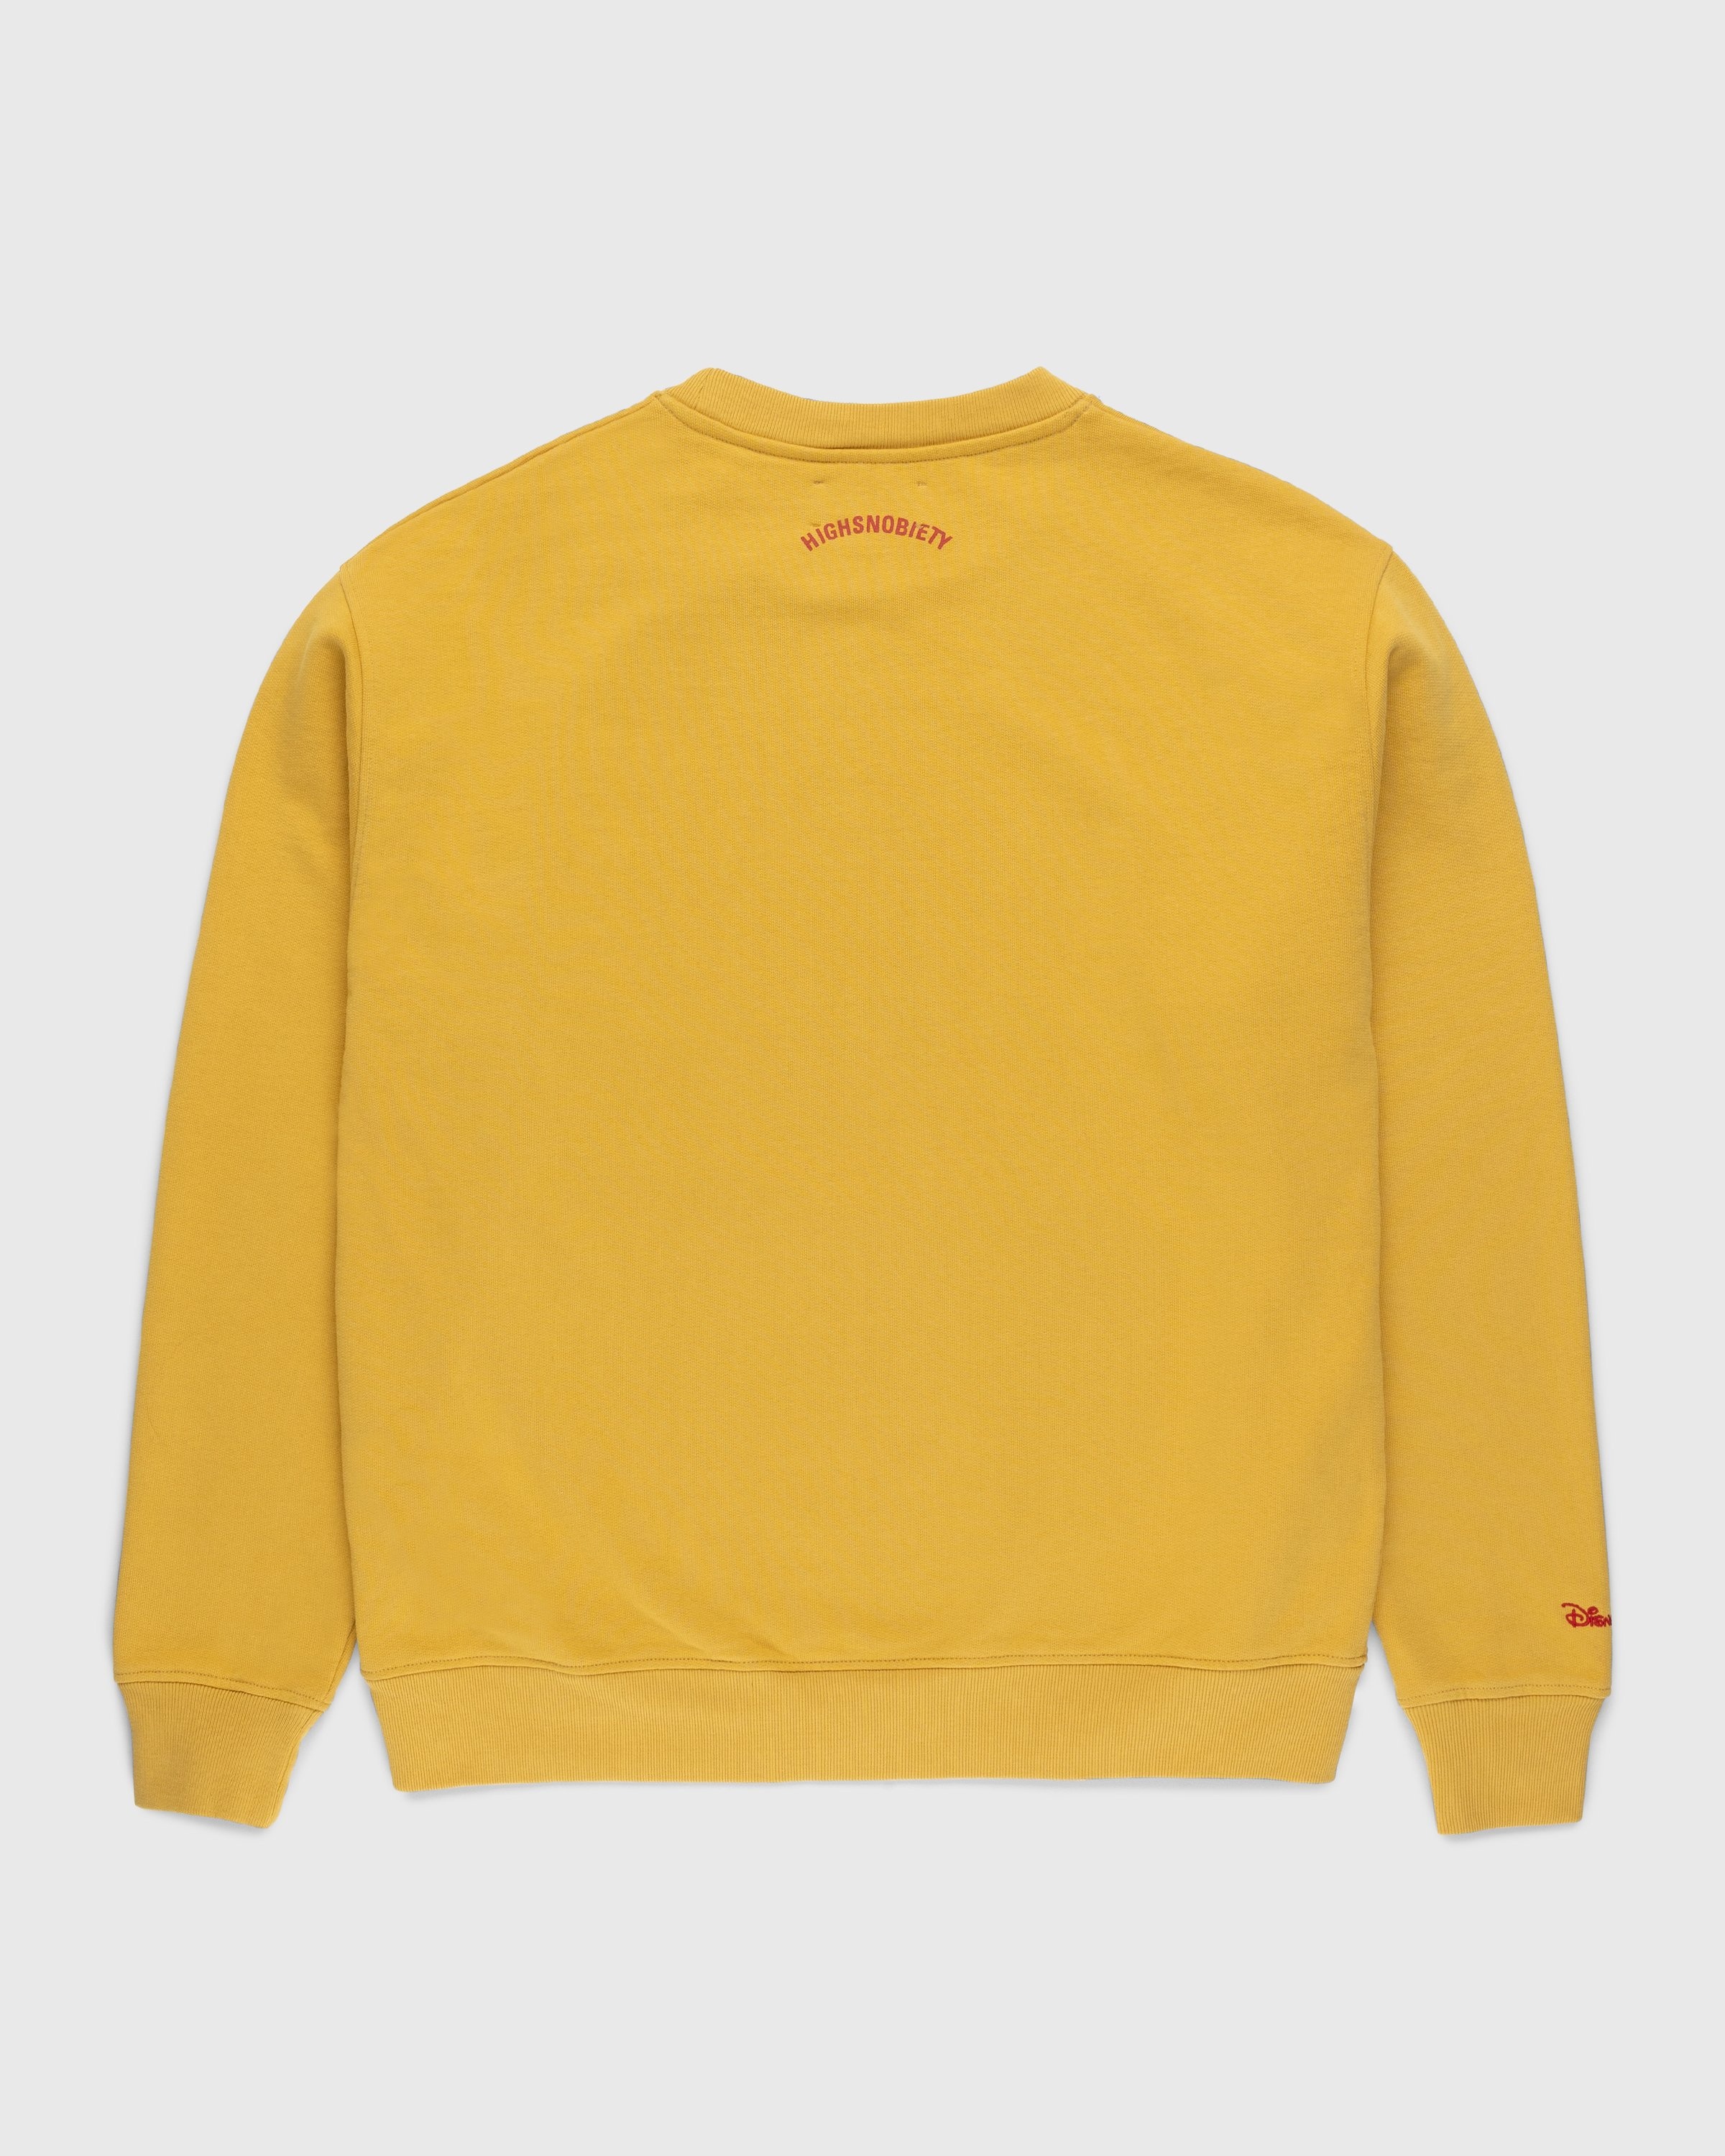 Disney Fantasia x Highsnobiety – Graphic Crewneck Yellow - Sweatshirts - Yellow - Image 2